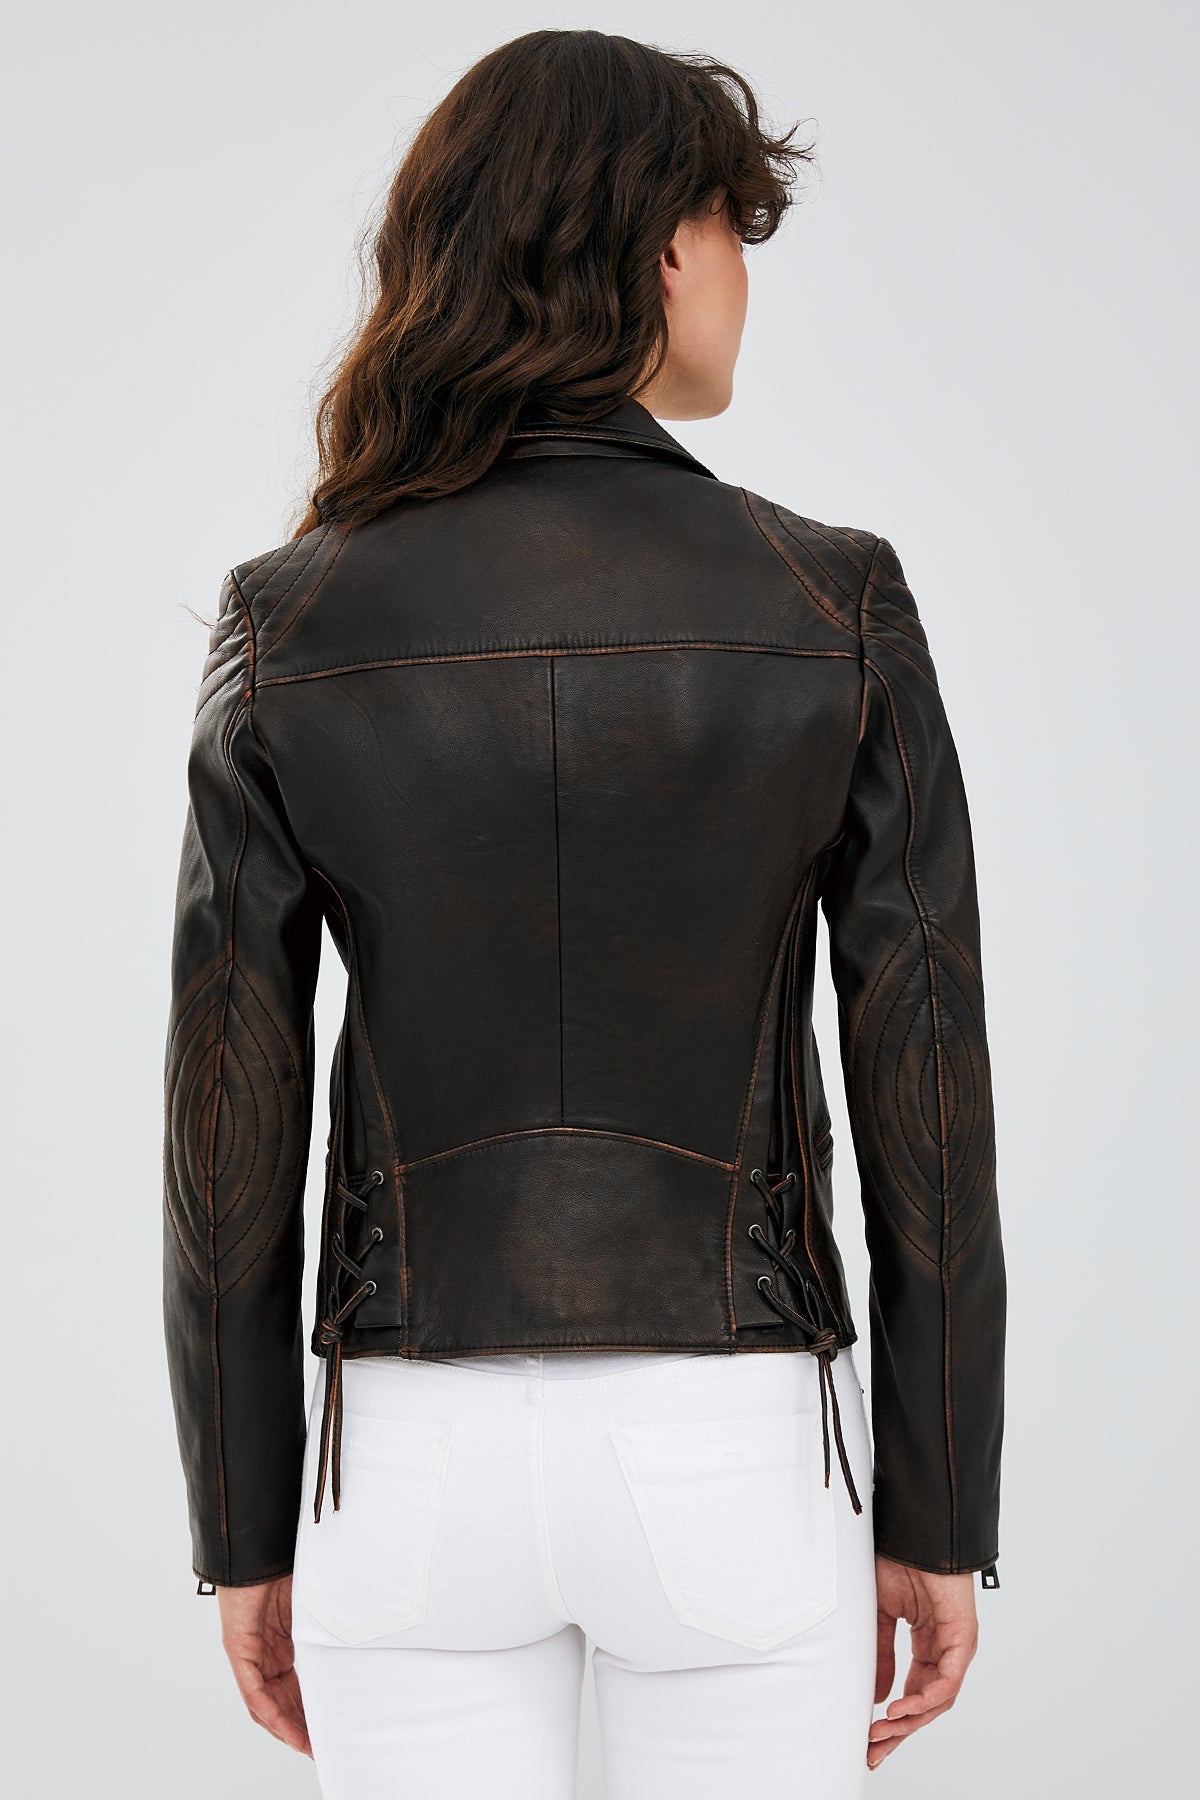 Xuma Brown Biker Leather Jacket